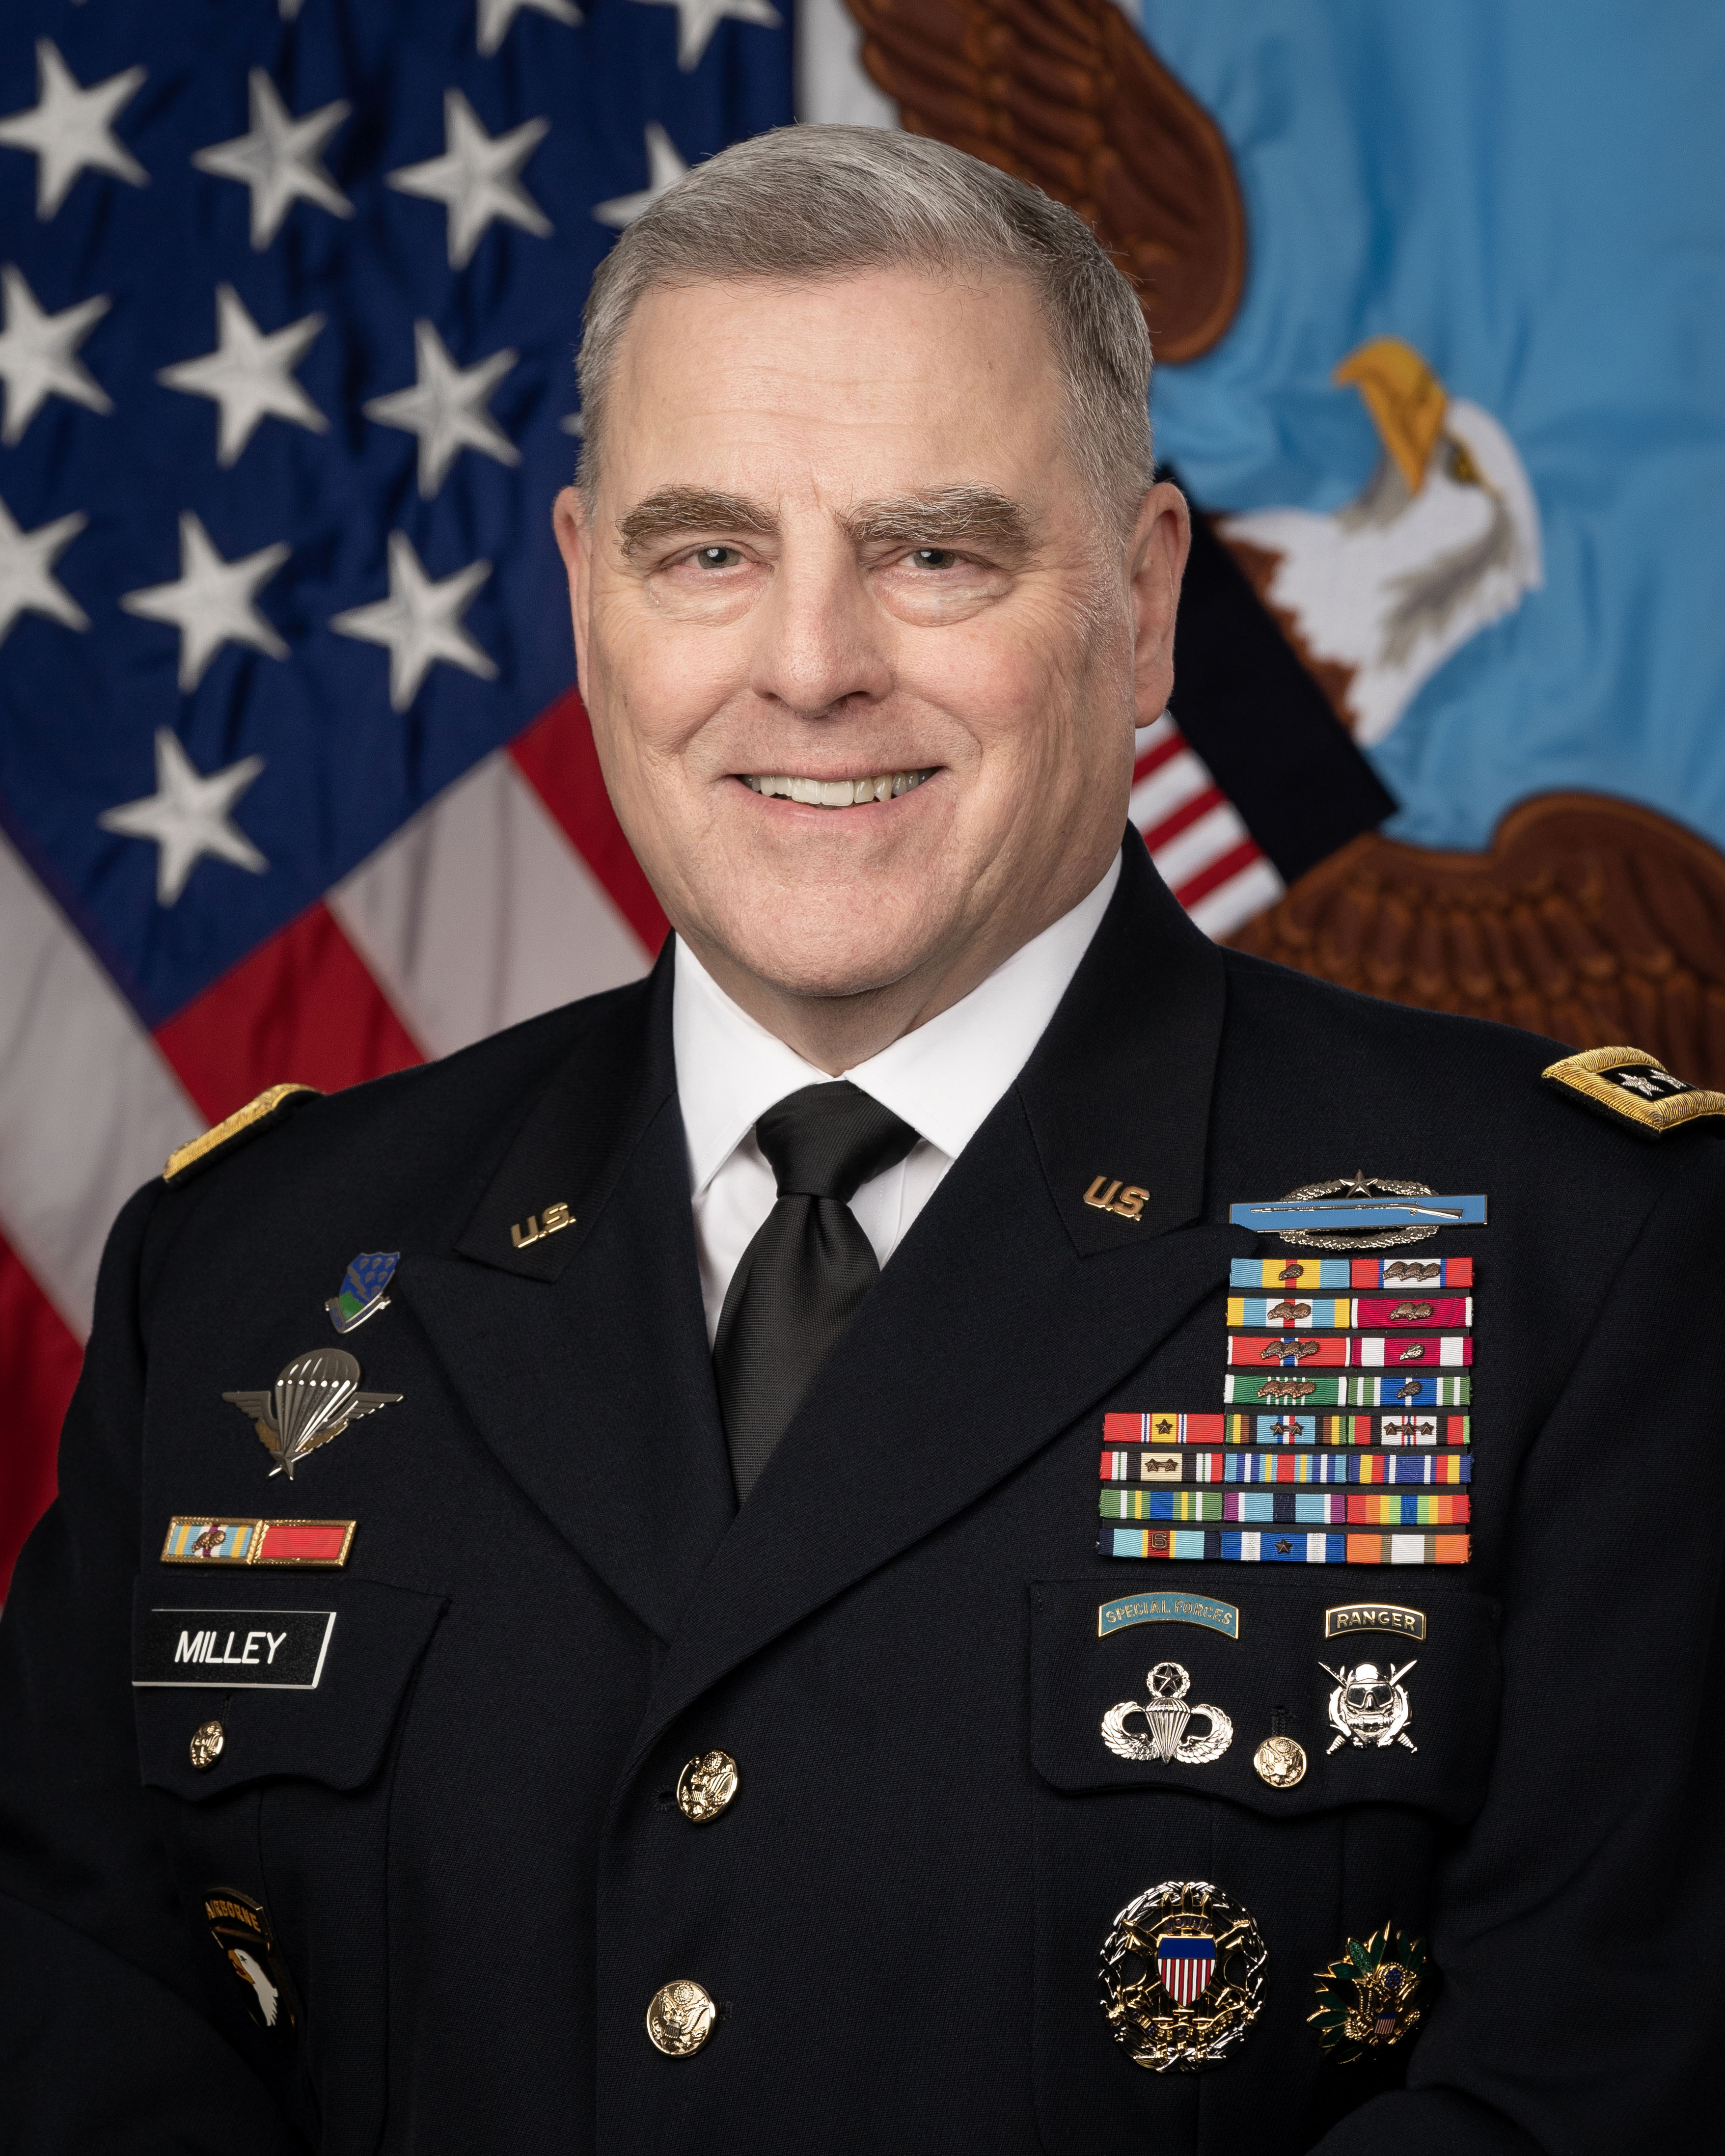 General Mark Alexander Milley